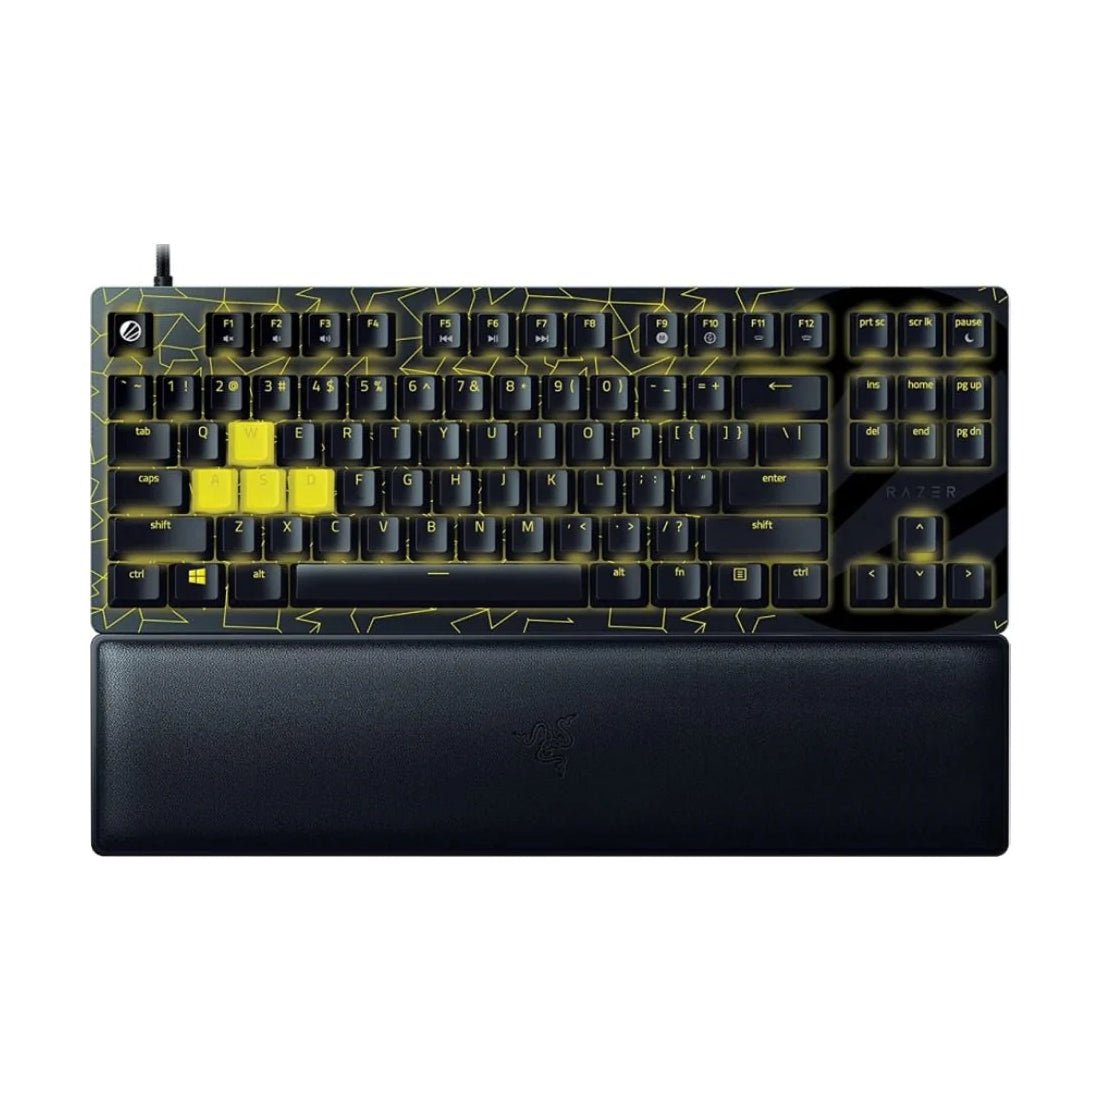 (Pre-Owned) Razer Huntsman V2 Keyboard - ESL Edition & Razer Viper Ultimate Mouse - لوحة مفاتيح و فأرة مستعملين - Store 974 | ستور ٩٧٤